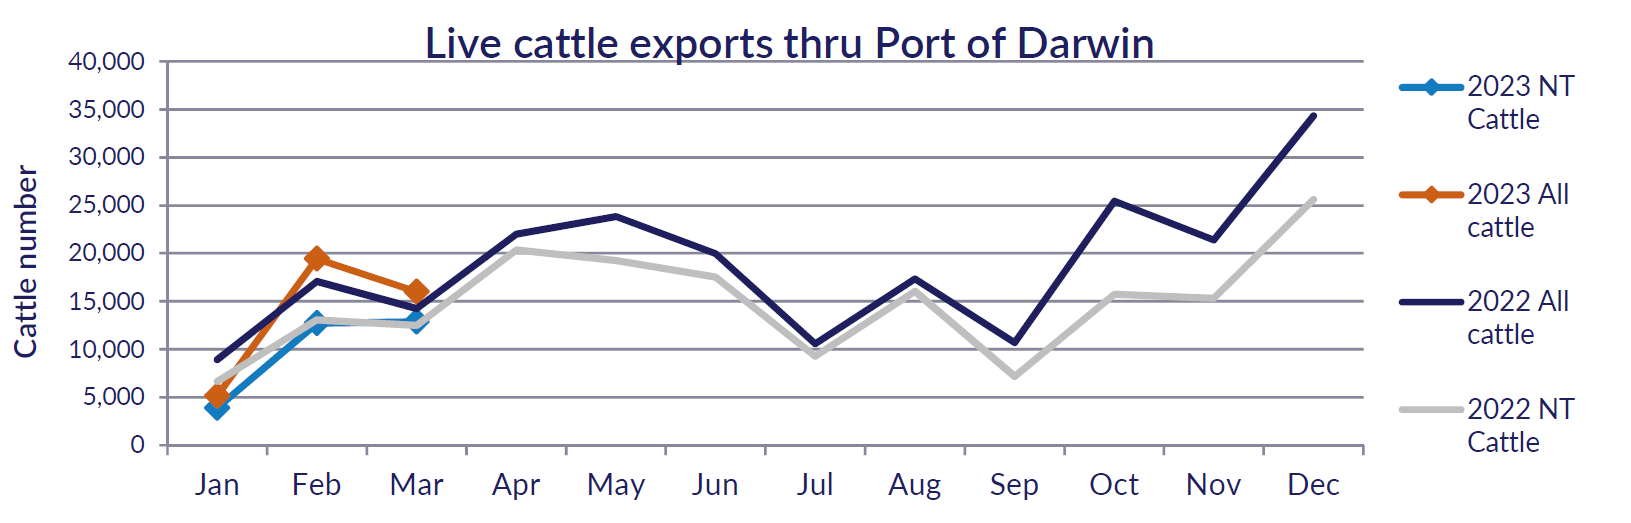 PMU Mar 2023 Live cattle exports thru Port of Darwin